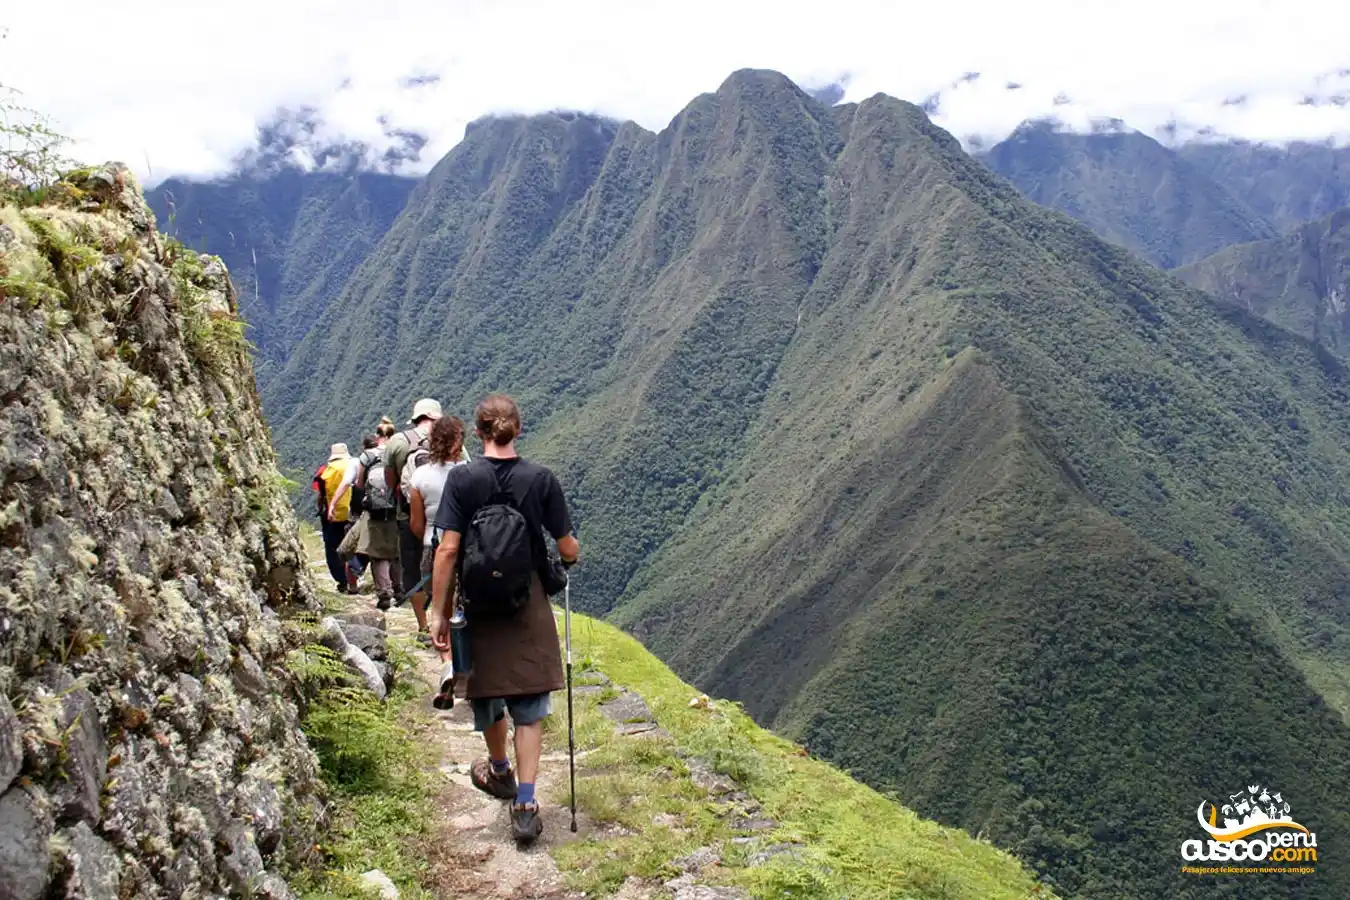 Inca Trail approaching Wiñayhuayna
Source: CuscoPeru.com